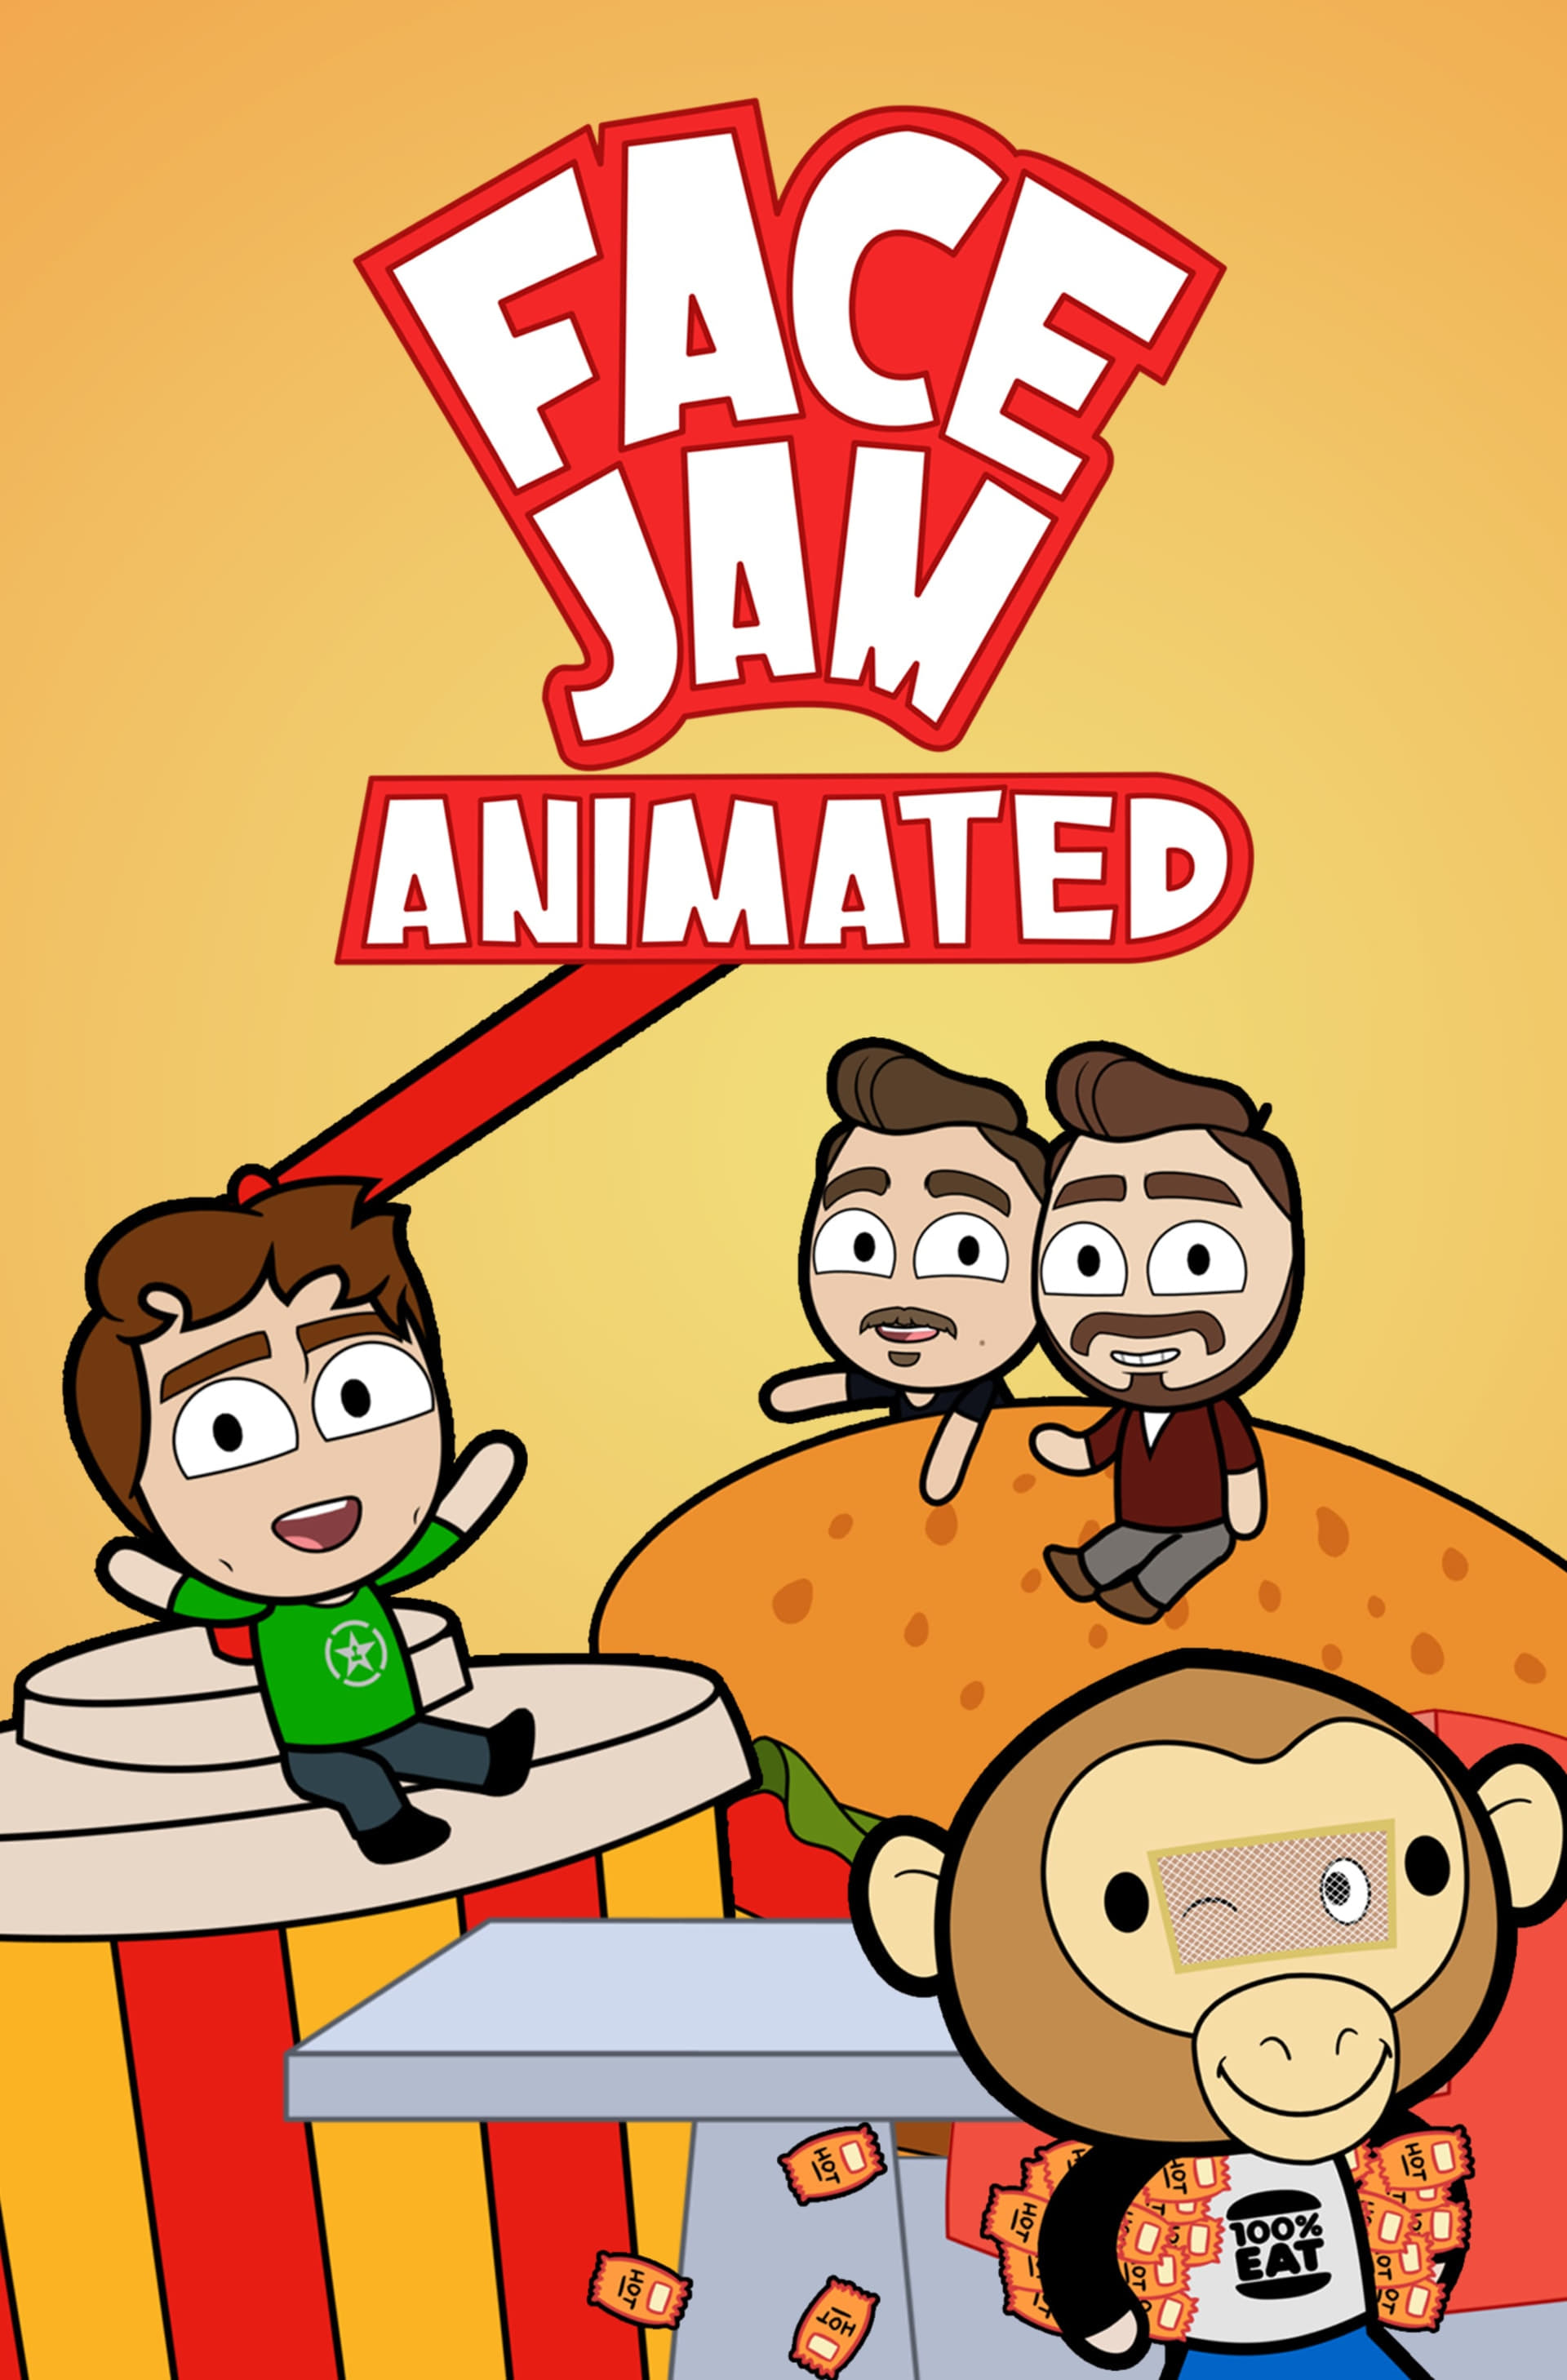 Face Jam Animated